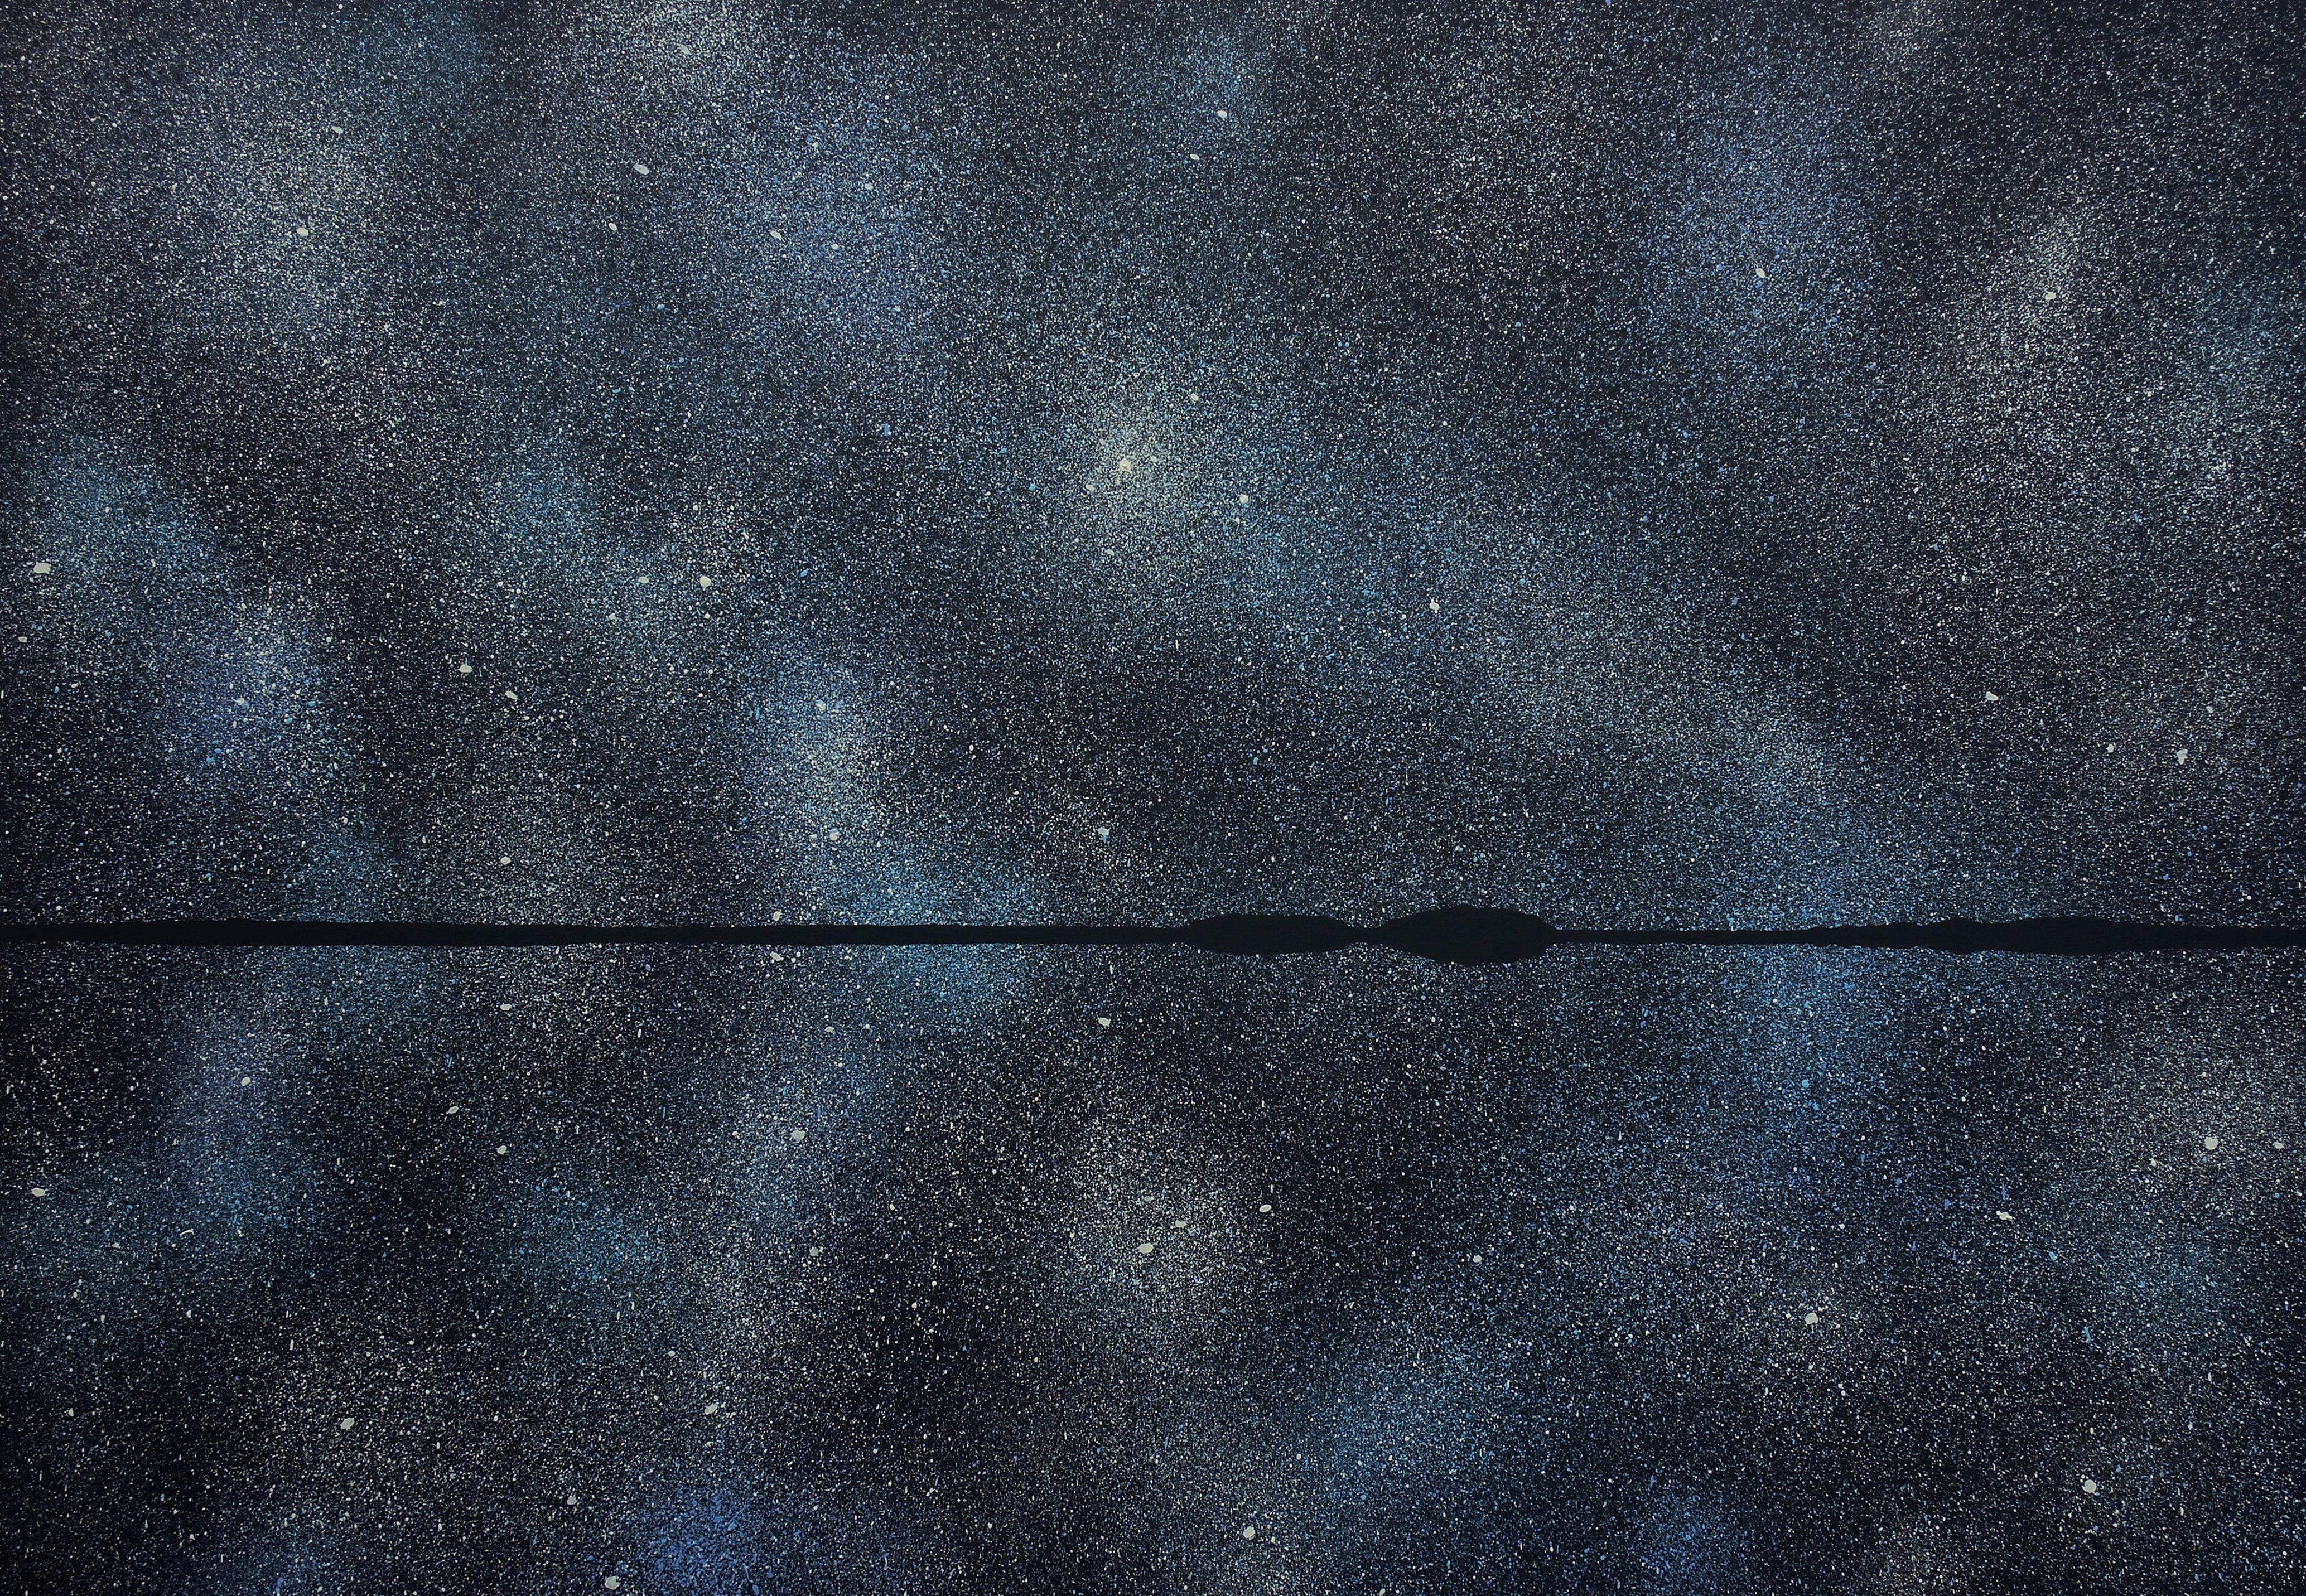 Stars 21 August 23:36, Modern Night Sky Landscape Painting, Minimalist Art 